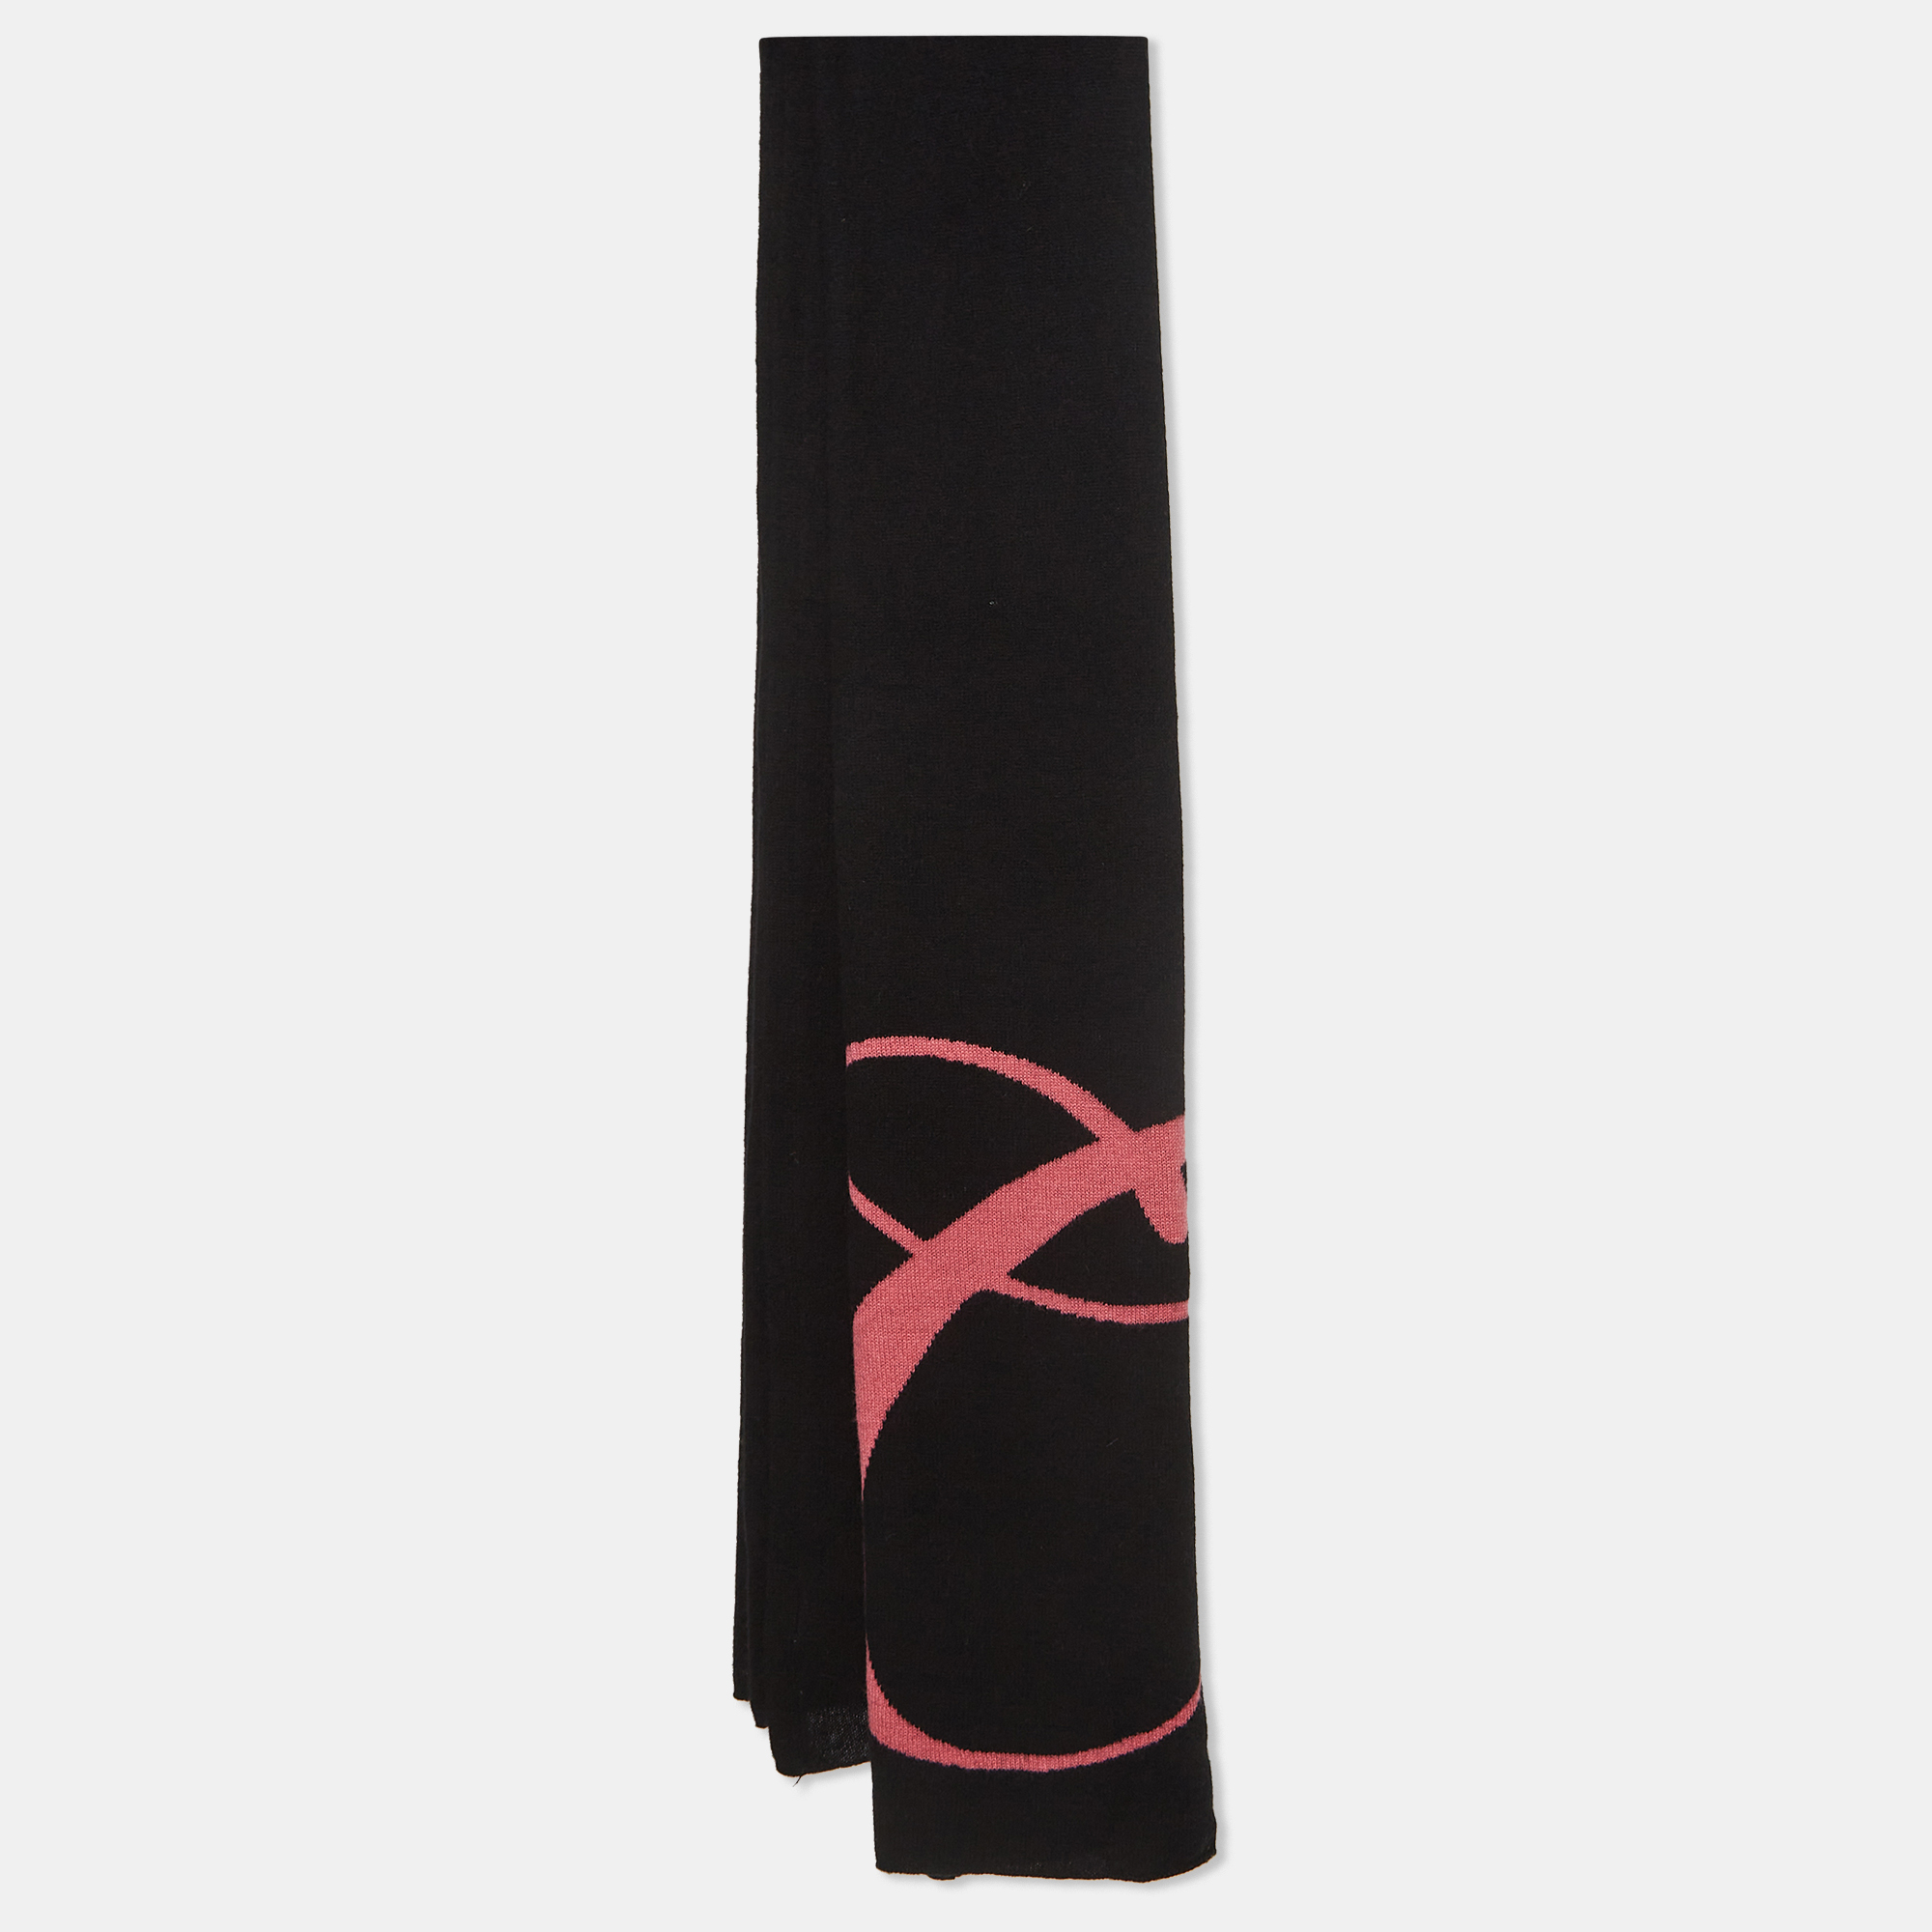 Dee ocleppo back cashmere monogrammed shawl